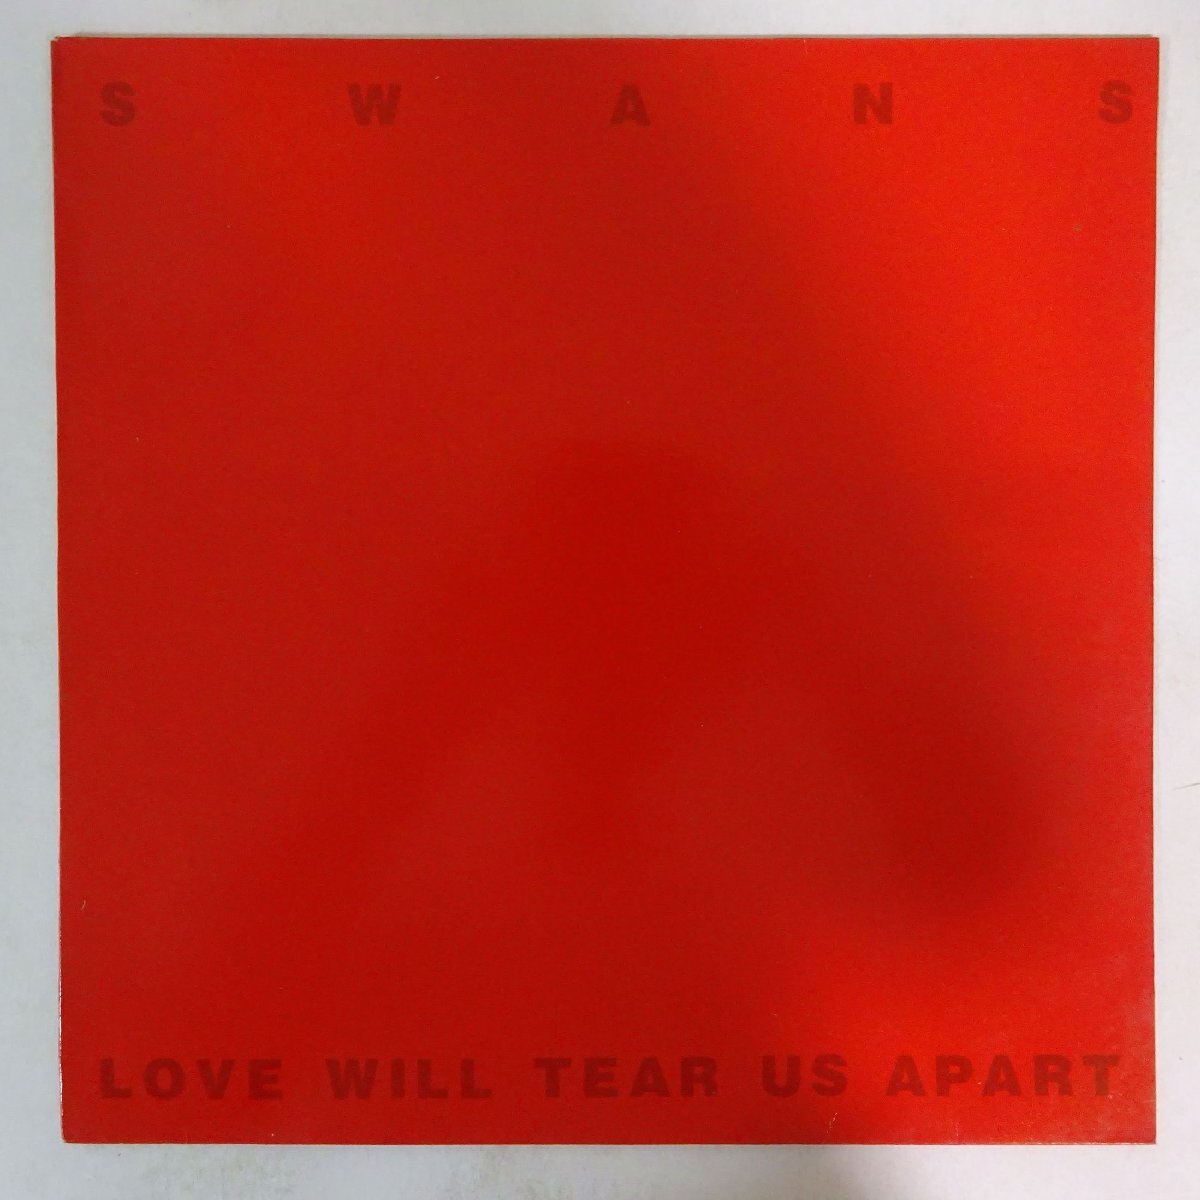 11186199;【UKオリジナル/Red Vinyl/12inch】Swans / Love Will Tear Us Apartの画像1